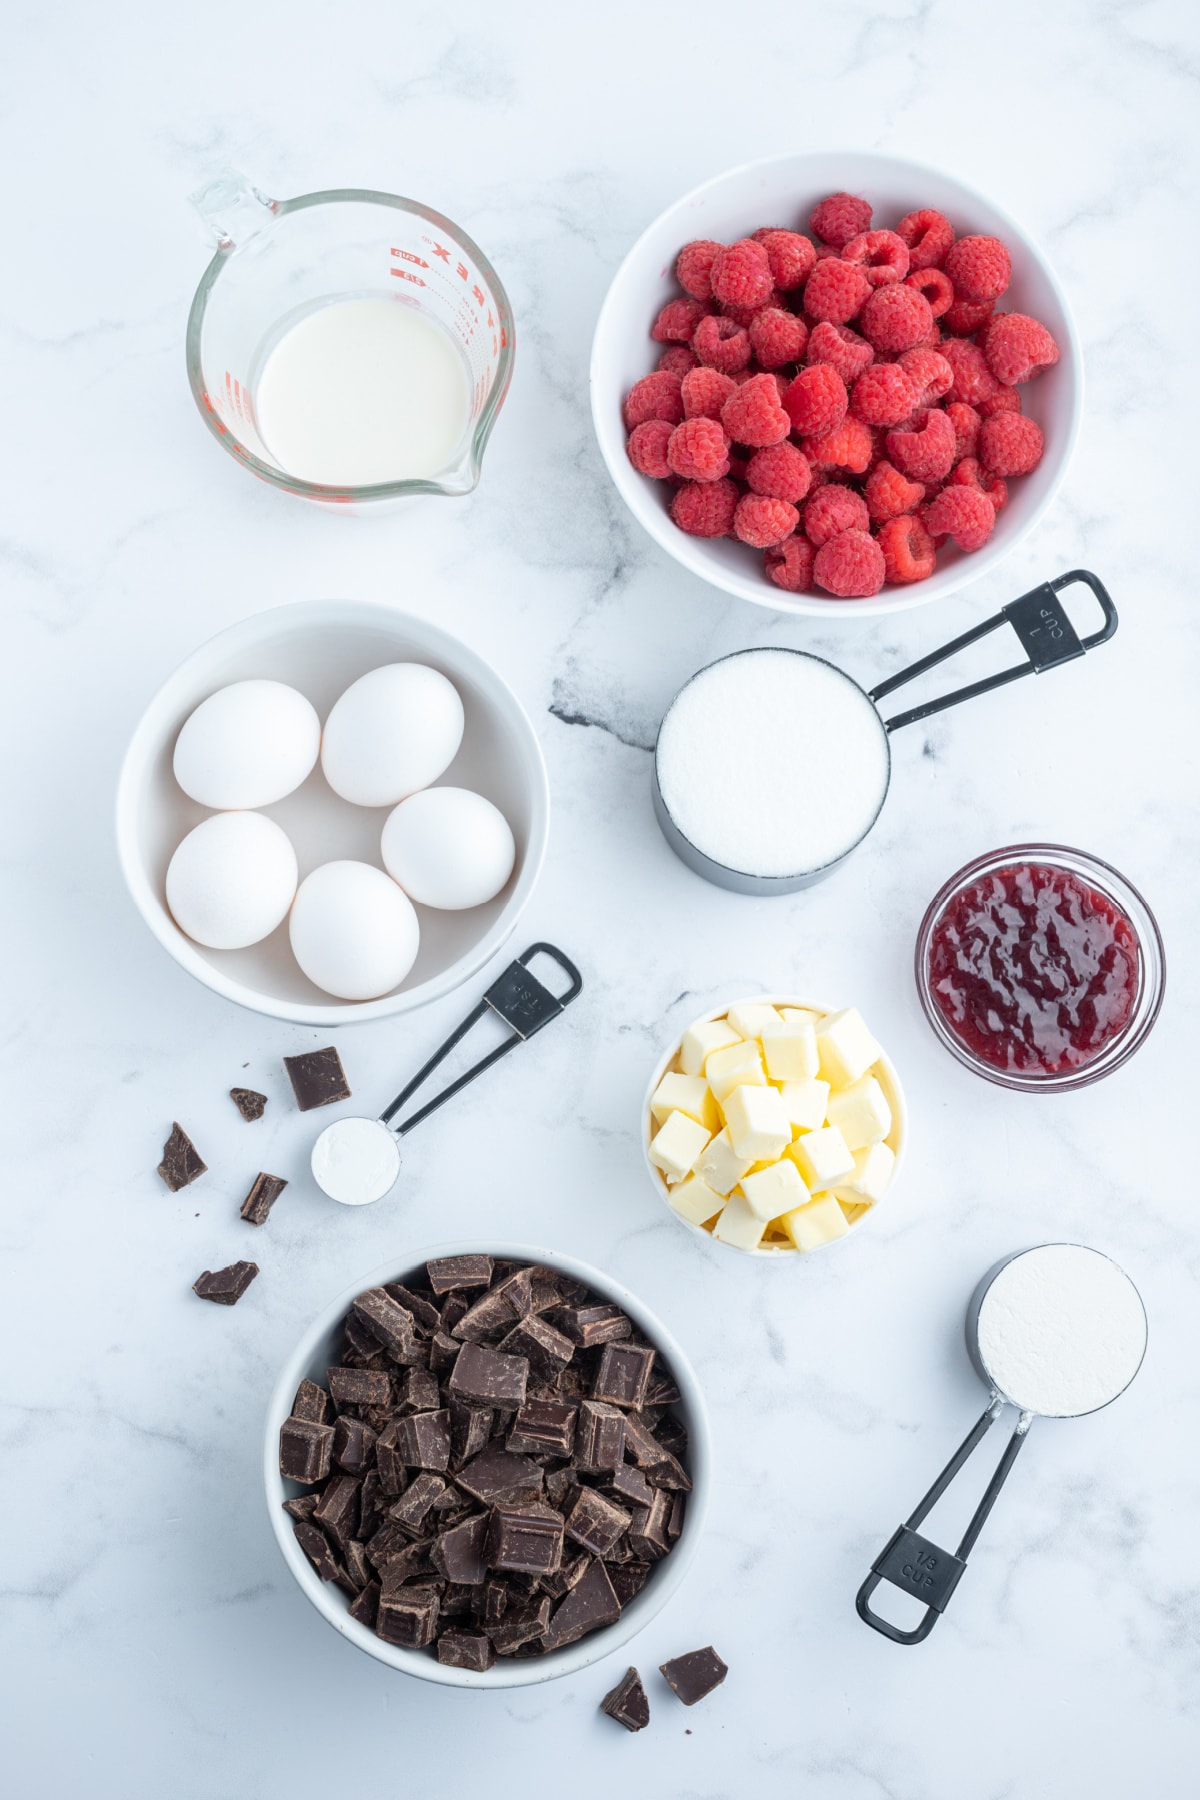 ingredients displayed for making fudgy chocolate raspberry bars